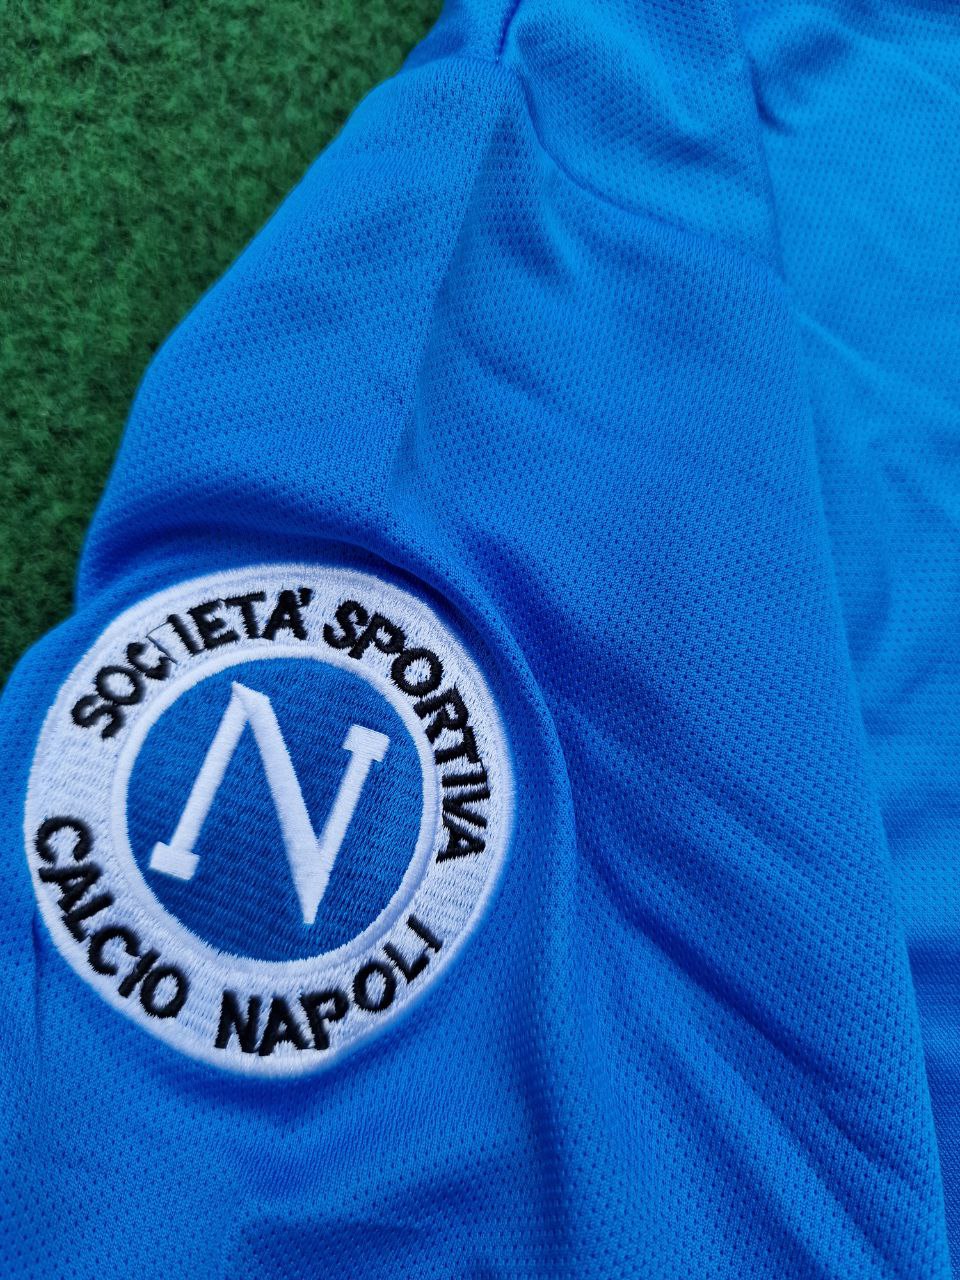 Napoli Retro Diego Armando Maradona Vintage Arma Football Maillot Maglia Jersey Knitwear